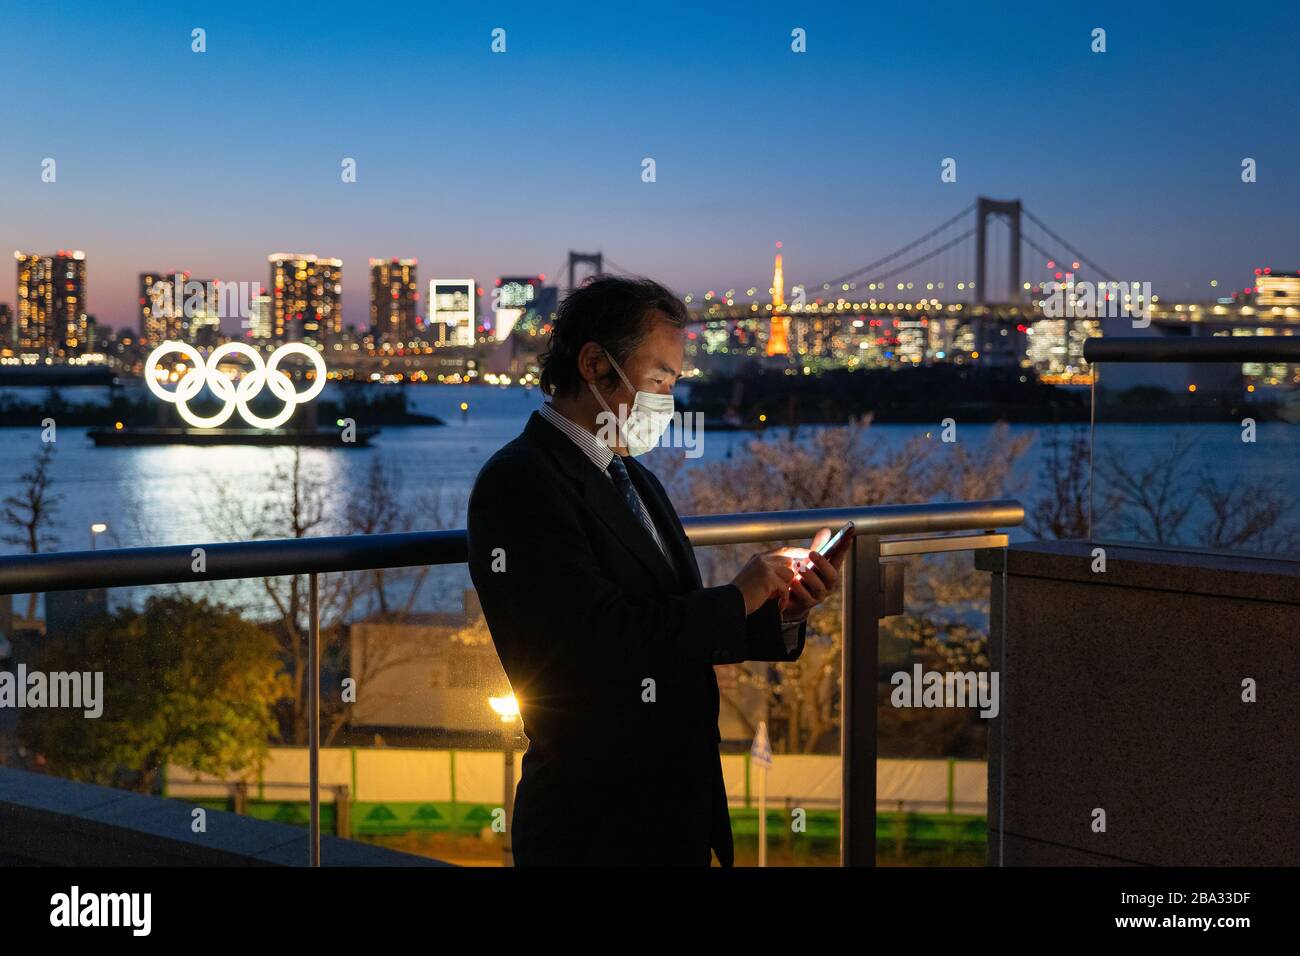 Odaiba, Minato Ward, Tokyo, Japan—MAR 25, 2020: Japanese Businessman with a Mask Texting near the Olympic Symbol during the Corona Virus Pandemic Stock Photo